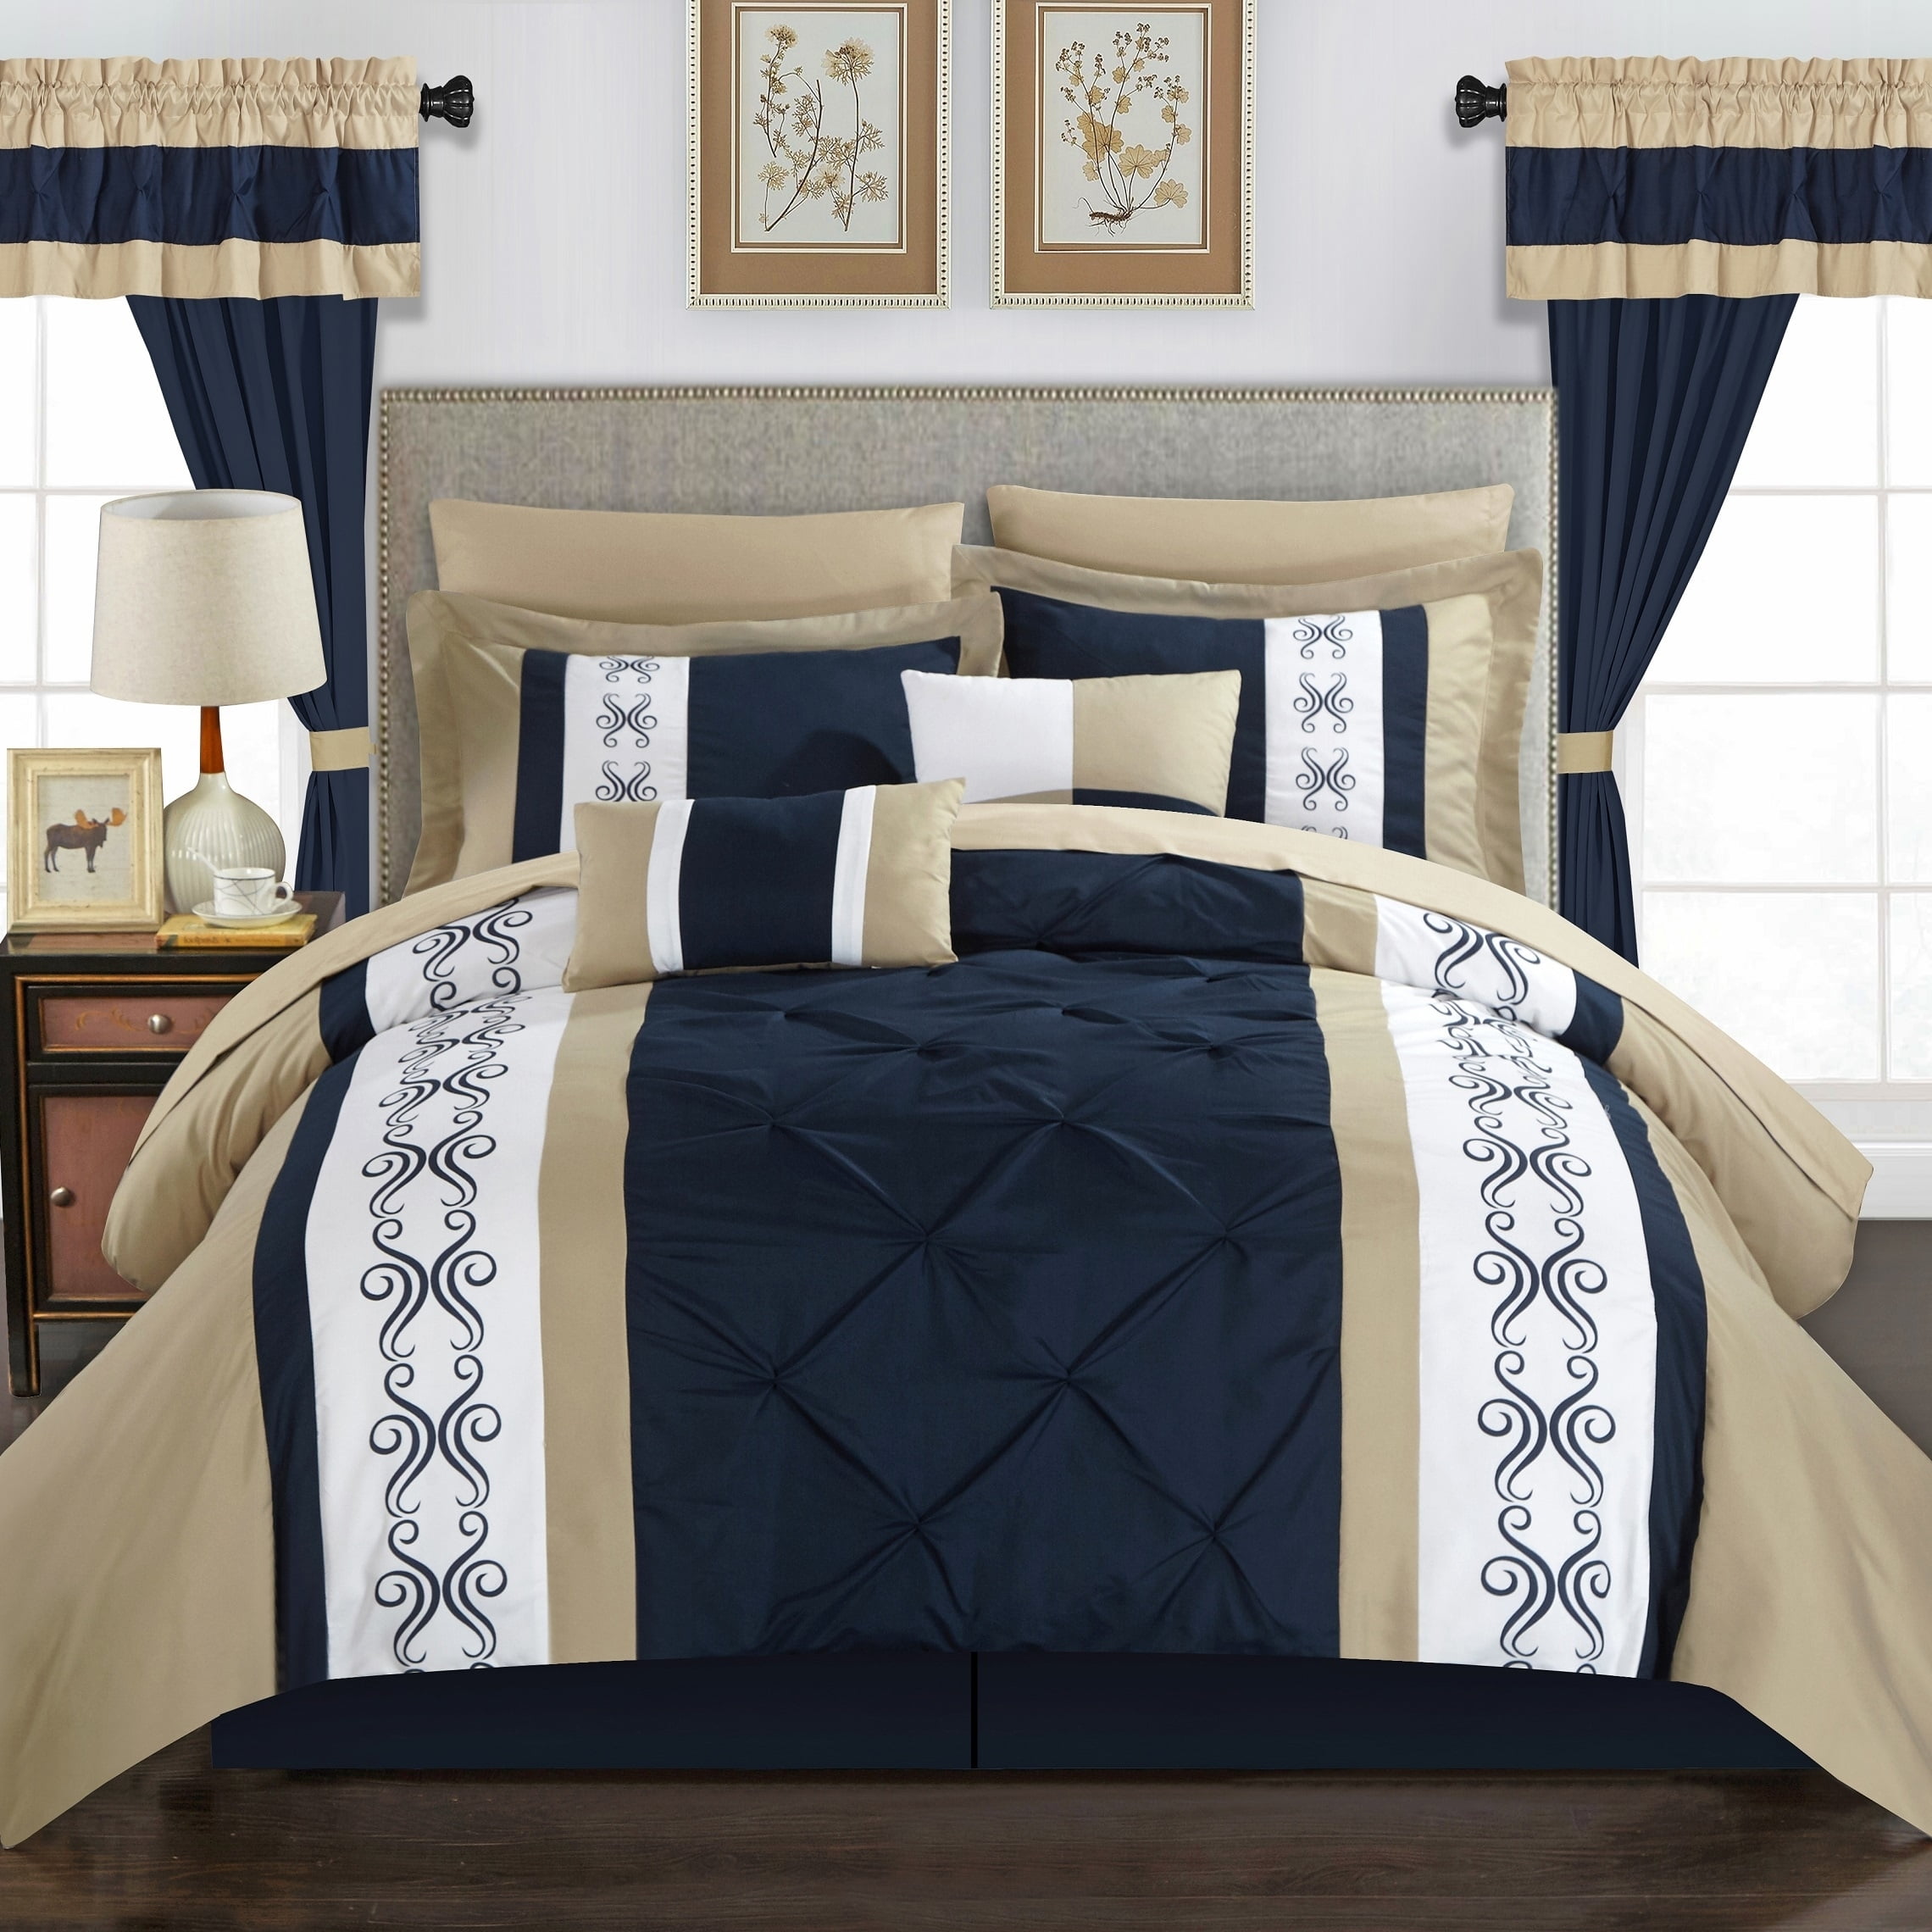 Bcs03331-us Owen 20 Piece Comforter Set, Navy - King